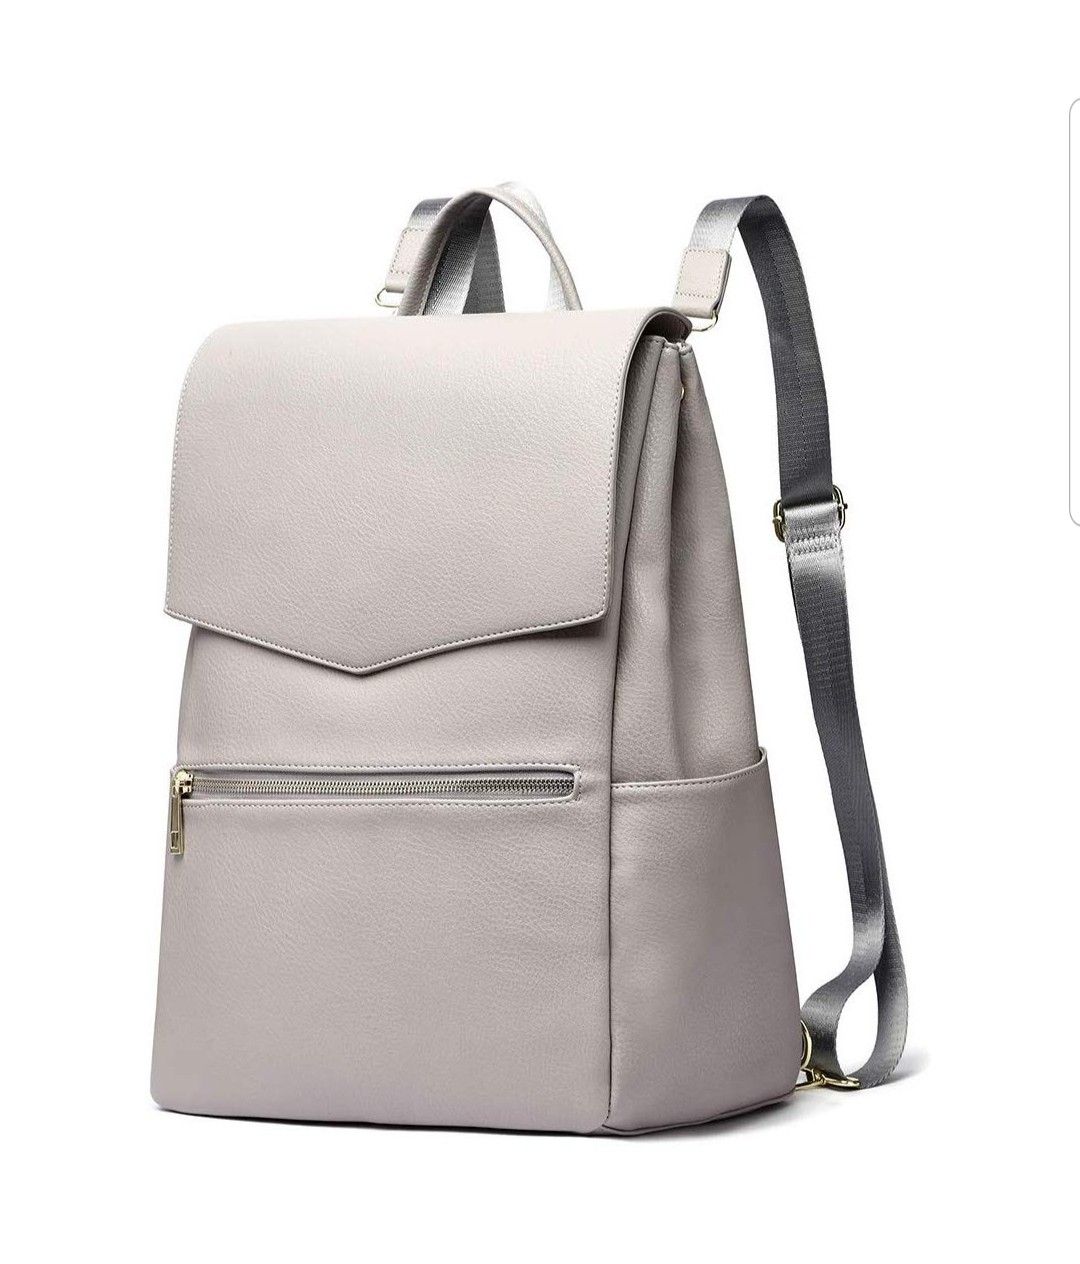 HaloVa Diaper Bag, Baby Nappy Backpack, Premium Leather Women's Travel Bag,